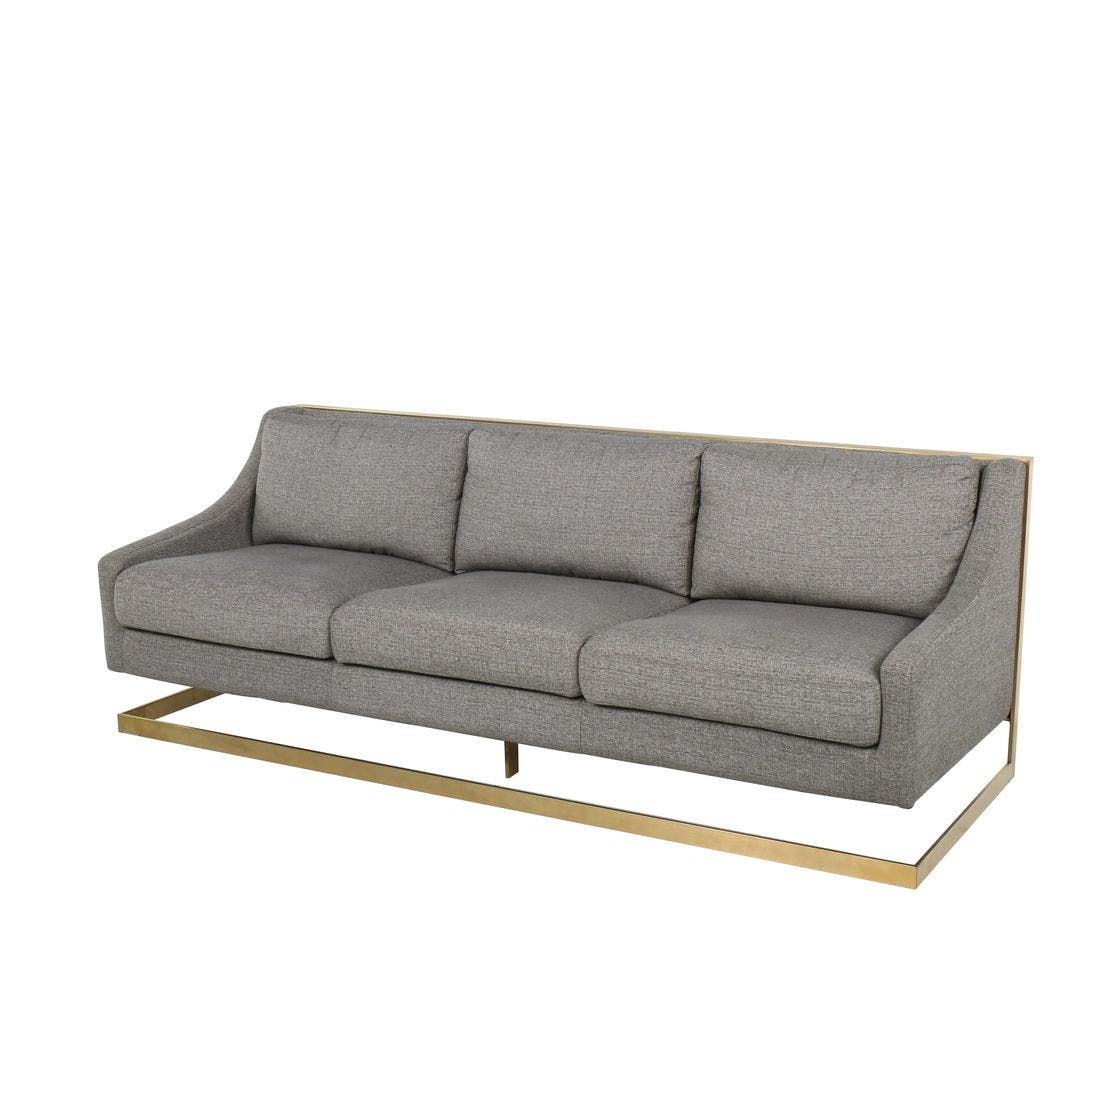 19125938-nurazzo-furniture-sofa-recliner-sofas-31